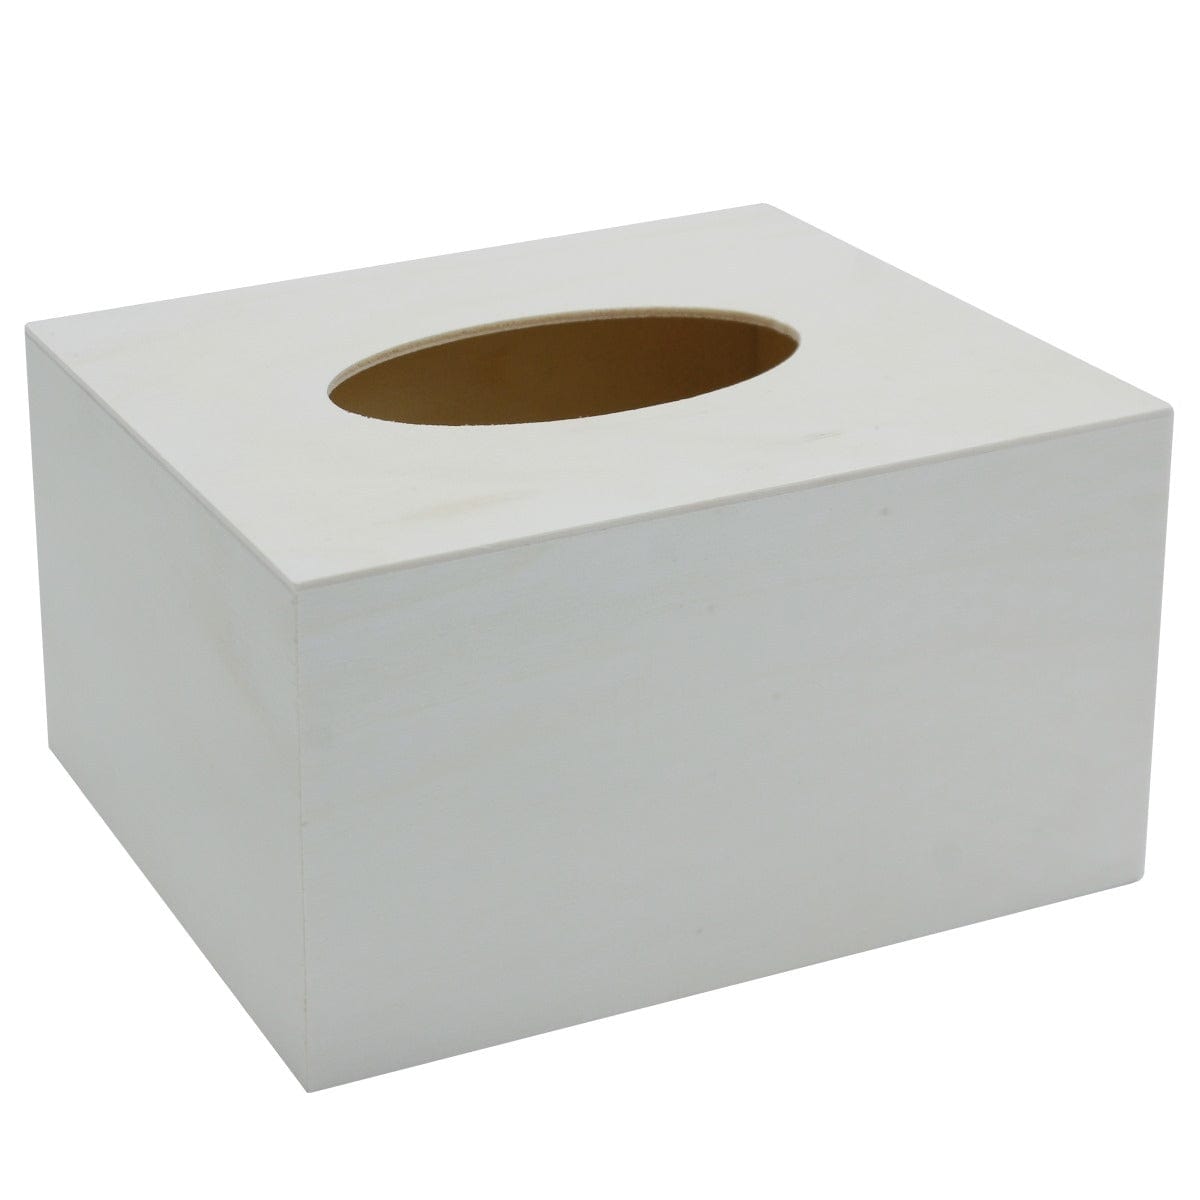 jags-mumbai MDF Box MDF Wooden Tissue Box small -Contain 1 Unit